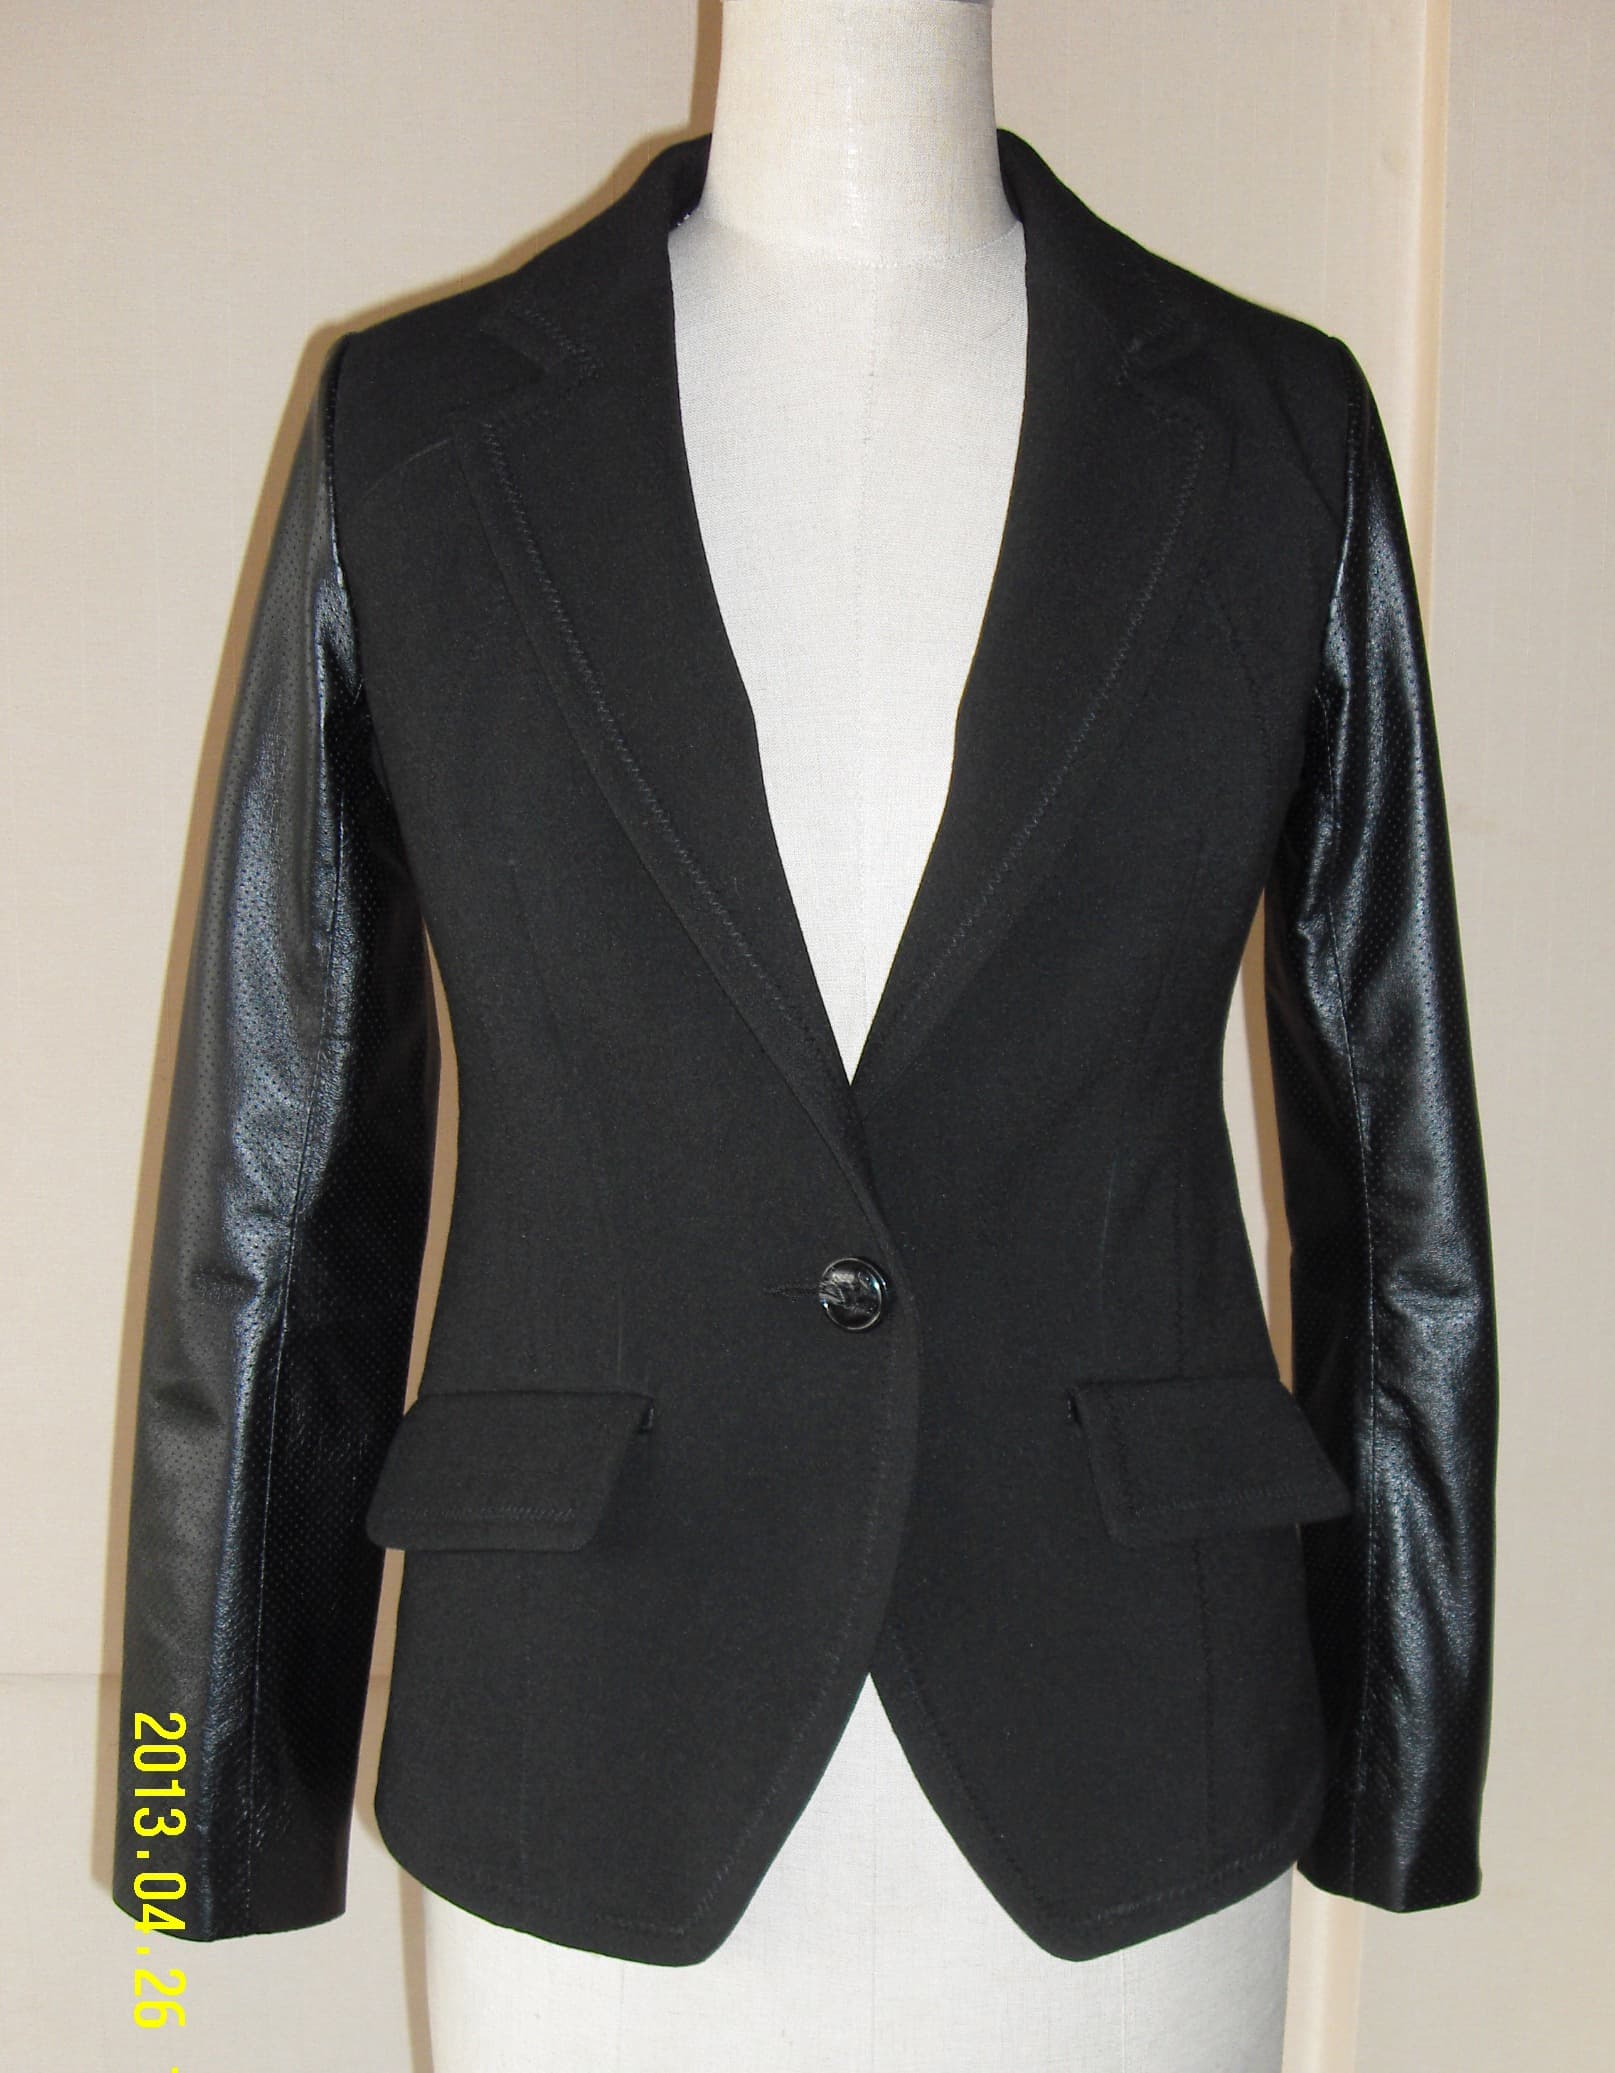 Ladies leather - textile combination jacket